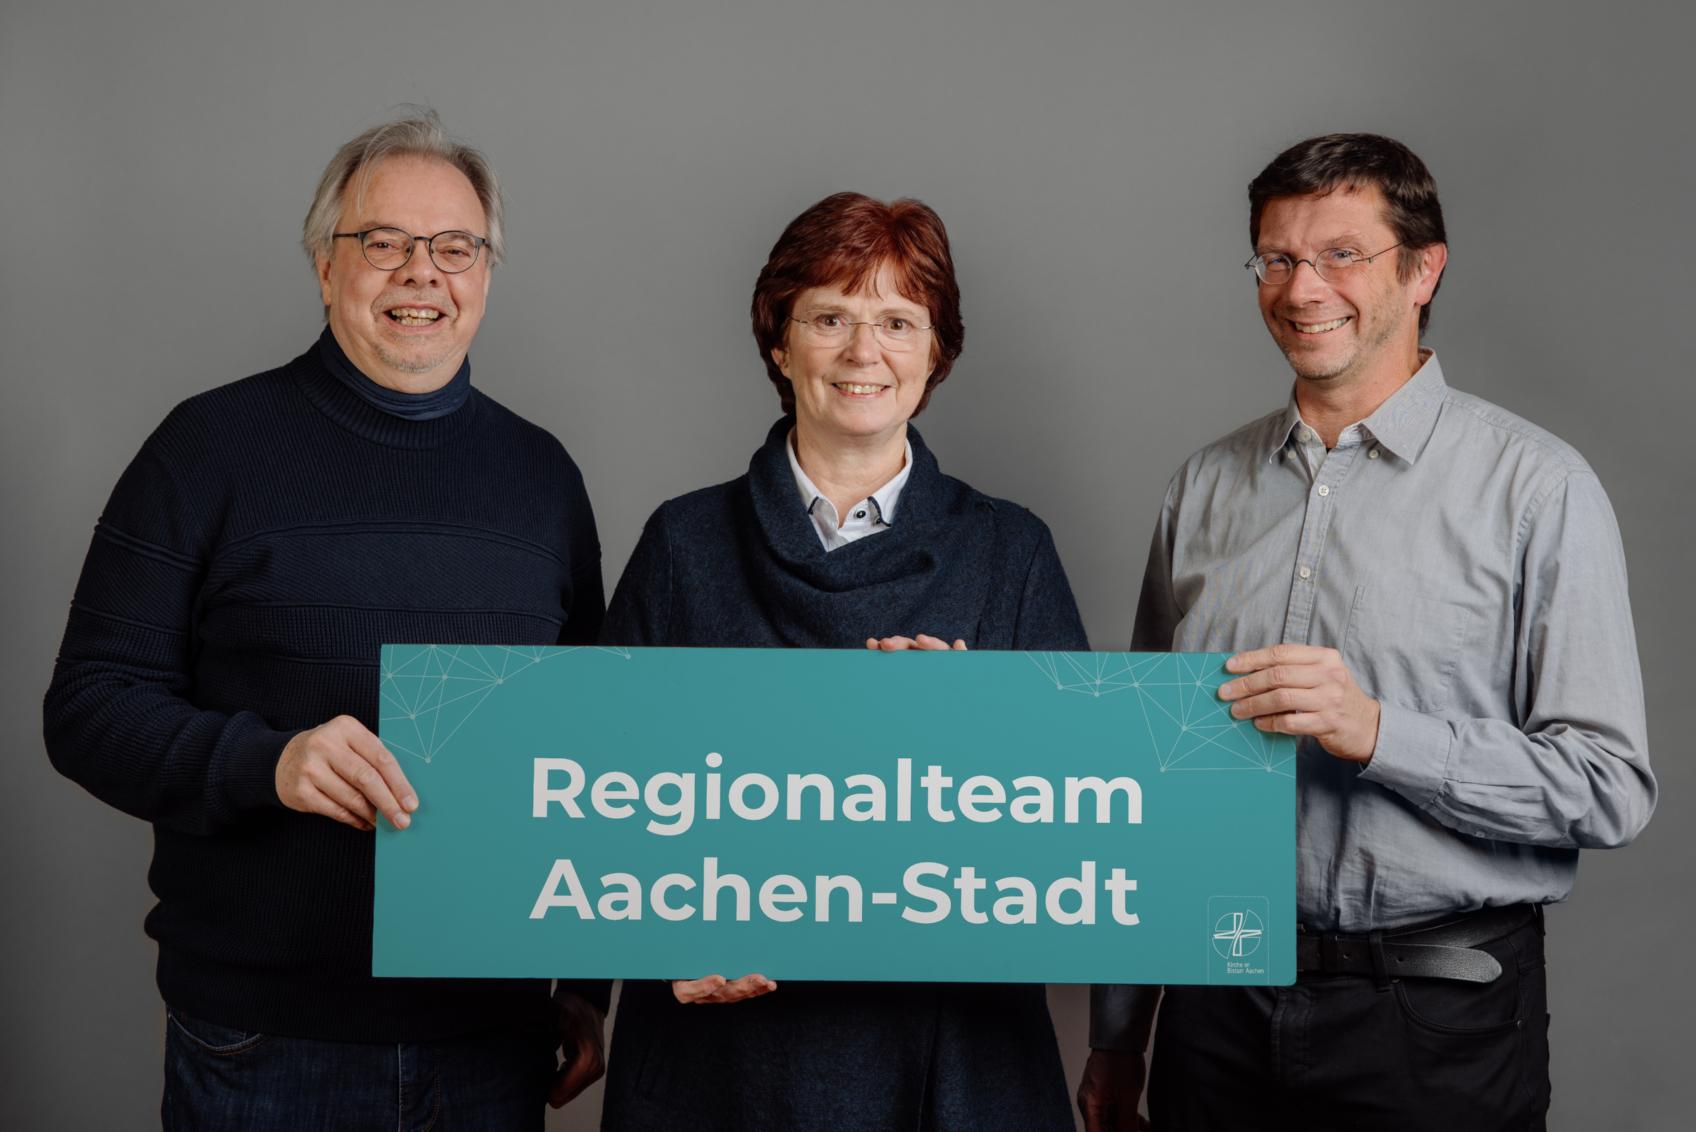 Regionalteams 2023 - 2027 - Regionalteam Aachen-Stadt, (v.l.) Walter Nett, Katrin Hohmann, Regionalvikar Frank Hendriks (c) Bistum Aachen - Martin Braun